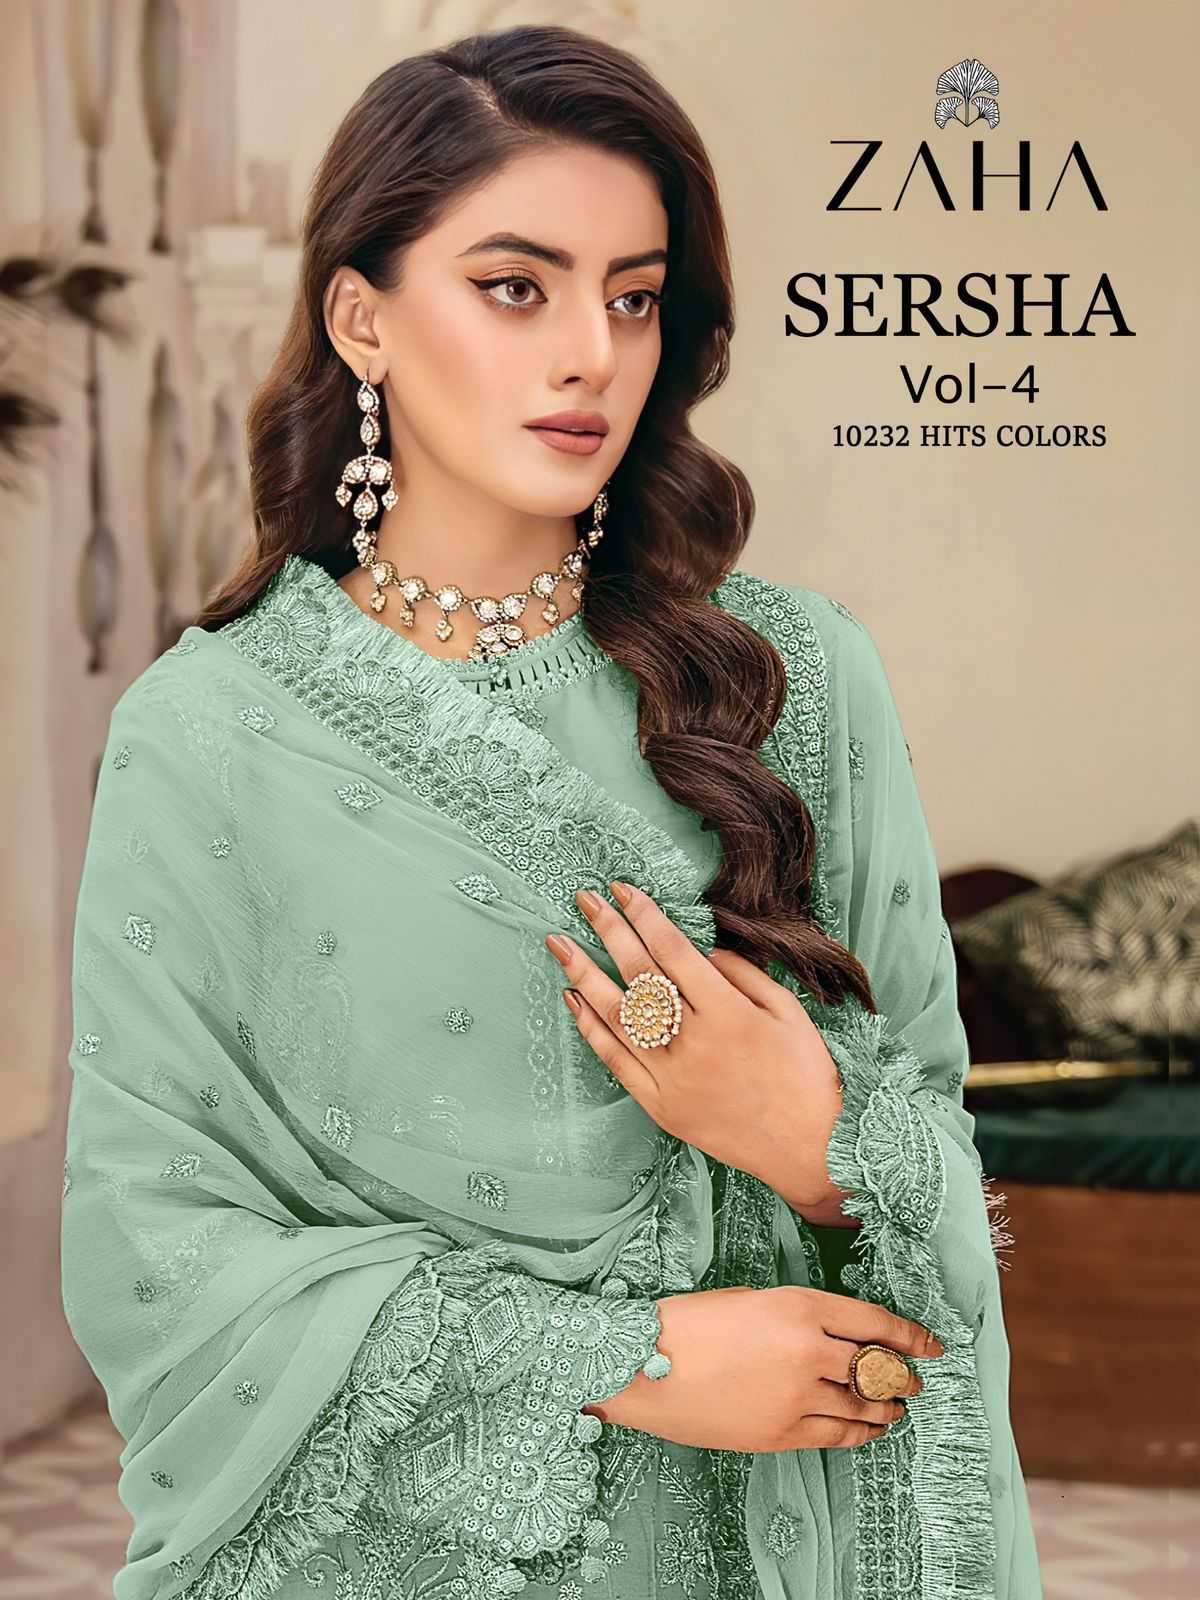 zaha sersha vol 4 10232 abcd hit colors pakistani designer dress material